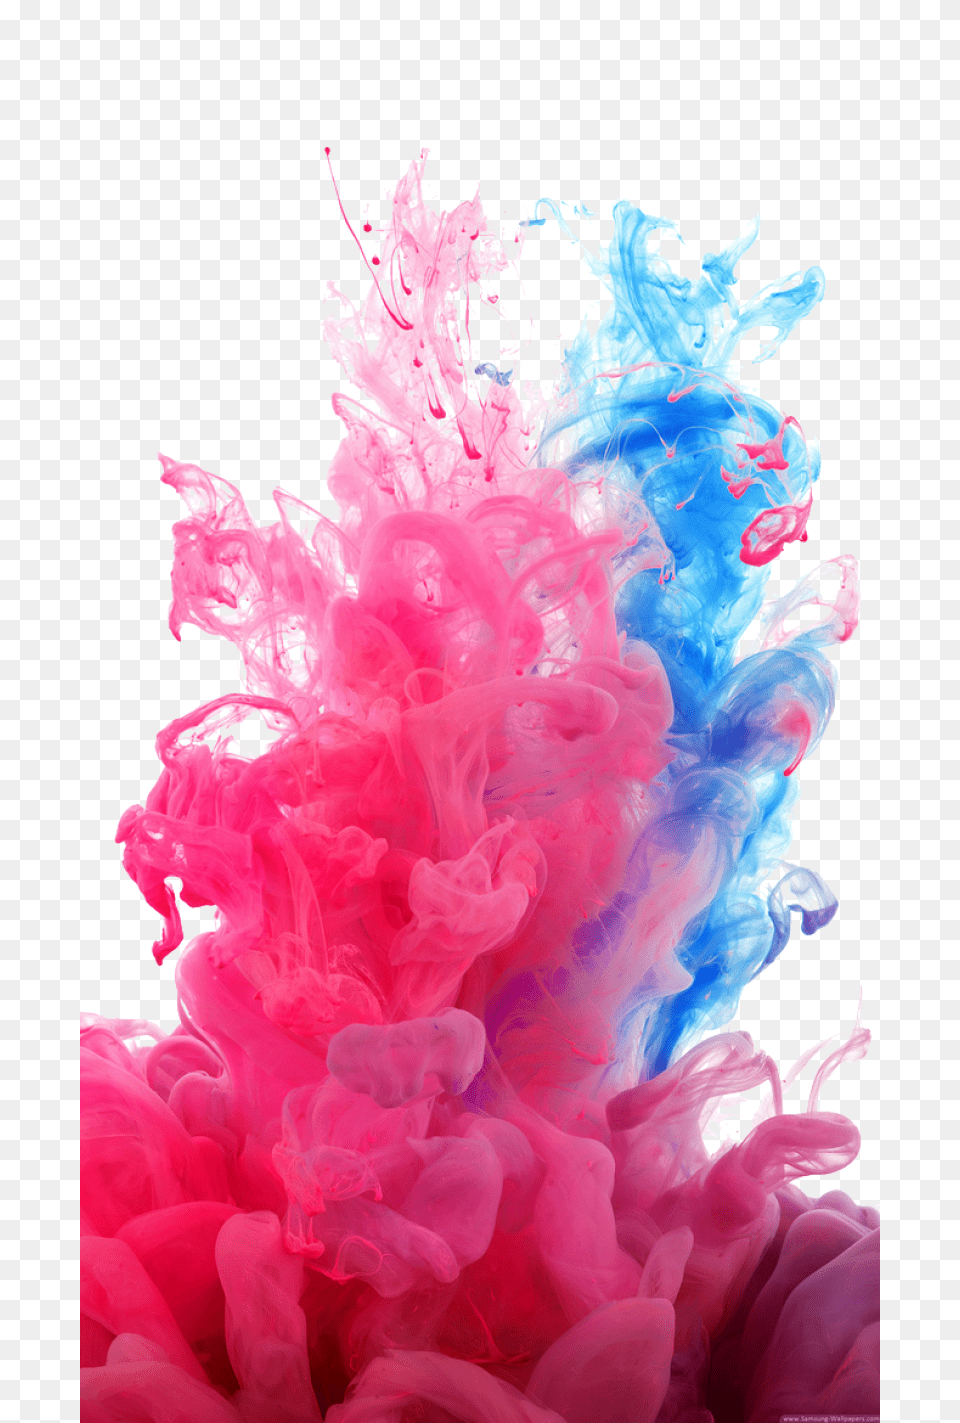 Colorful Smoke Image For Fondos De Pantalla De Lg, Mineral, Crystal, Baby, Person Png